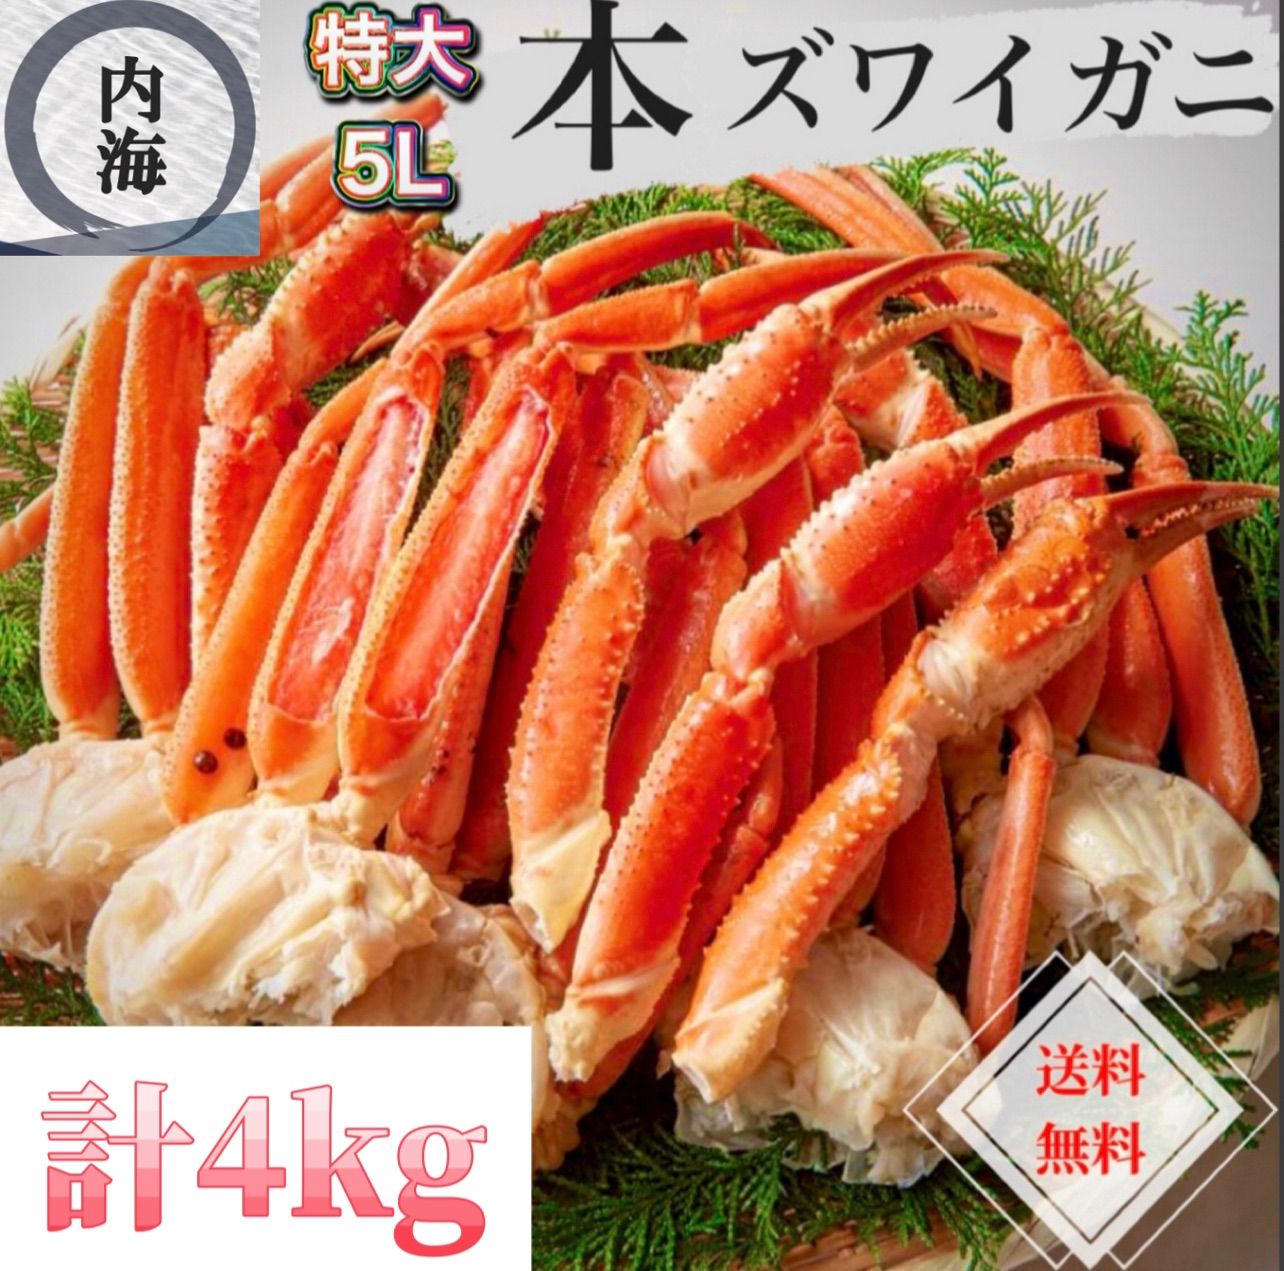 【NEW在庫】【苺子様専用】冷凍ボイルズワイガニ 4〜5Lサイズ 10肩 4kg 魚介類(加工食品)